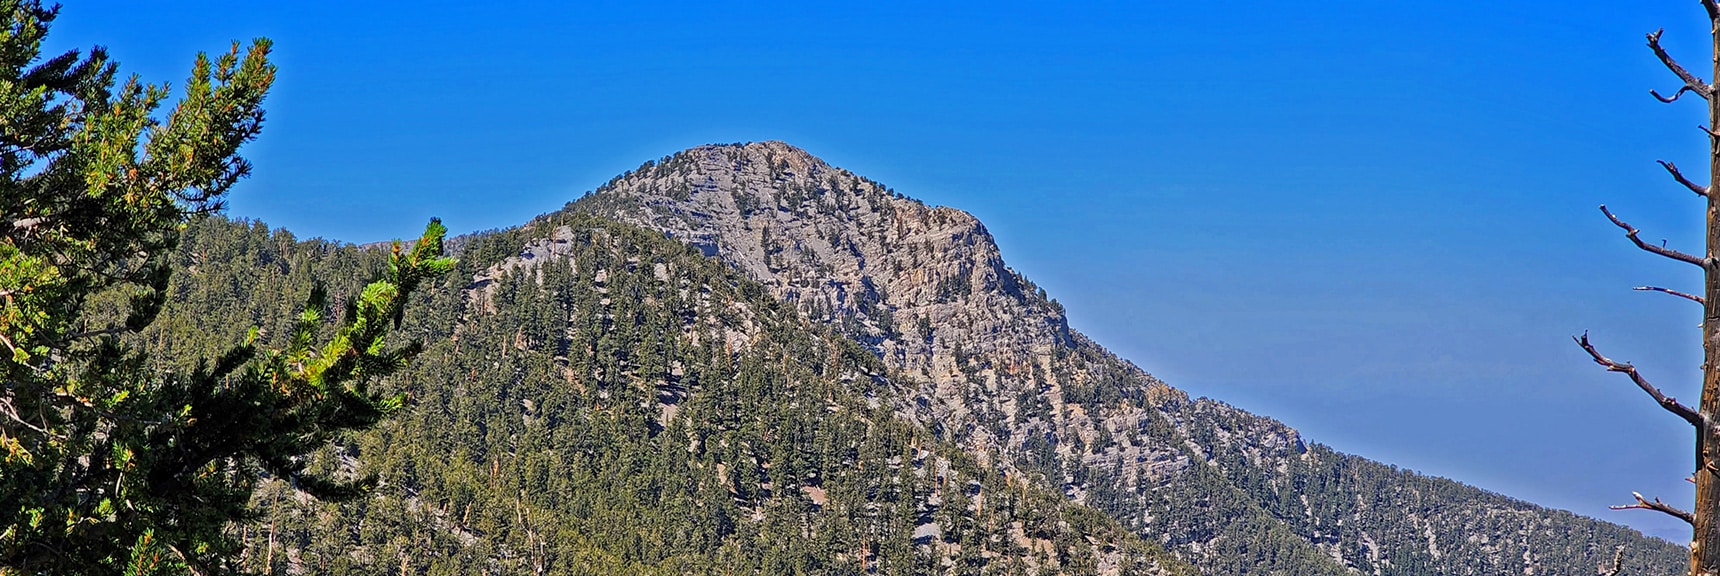 Lee Peak from Lee/Kyle Canyon Upper Ridgeline | Mummy Mountain Grand Crossing | Lee Canyon to Deer Creek Road | Mt Charleston Wilderness | Spring Mountains, Nevada |